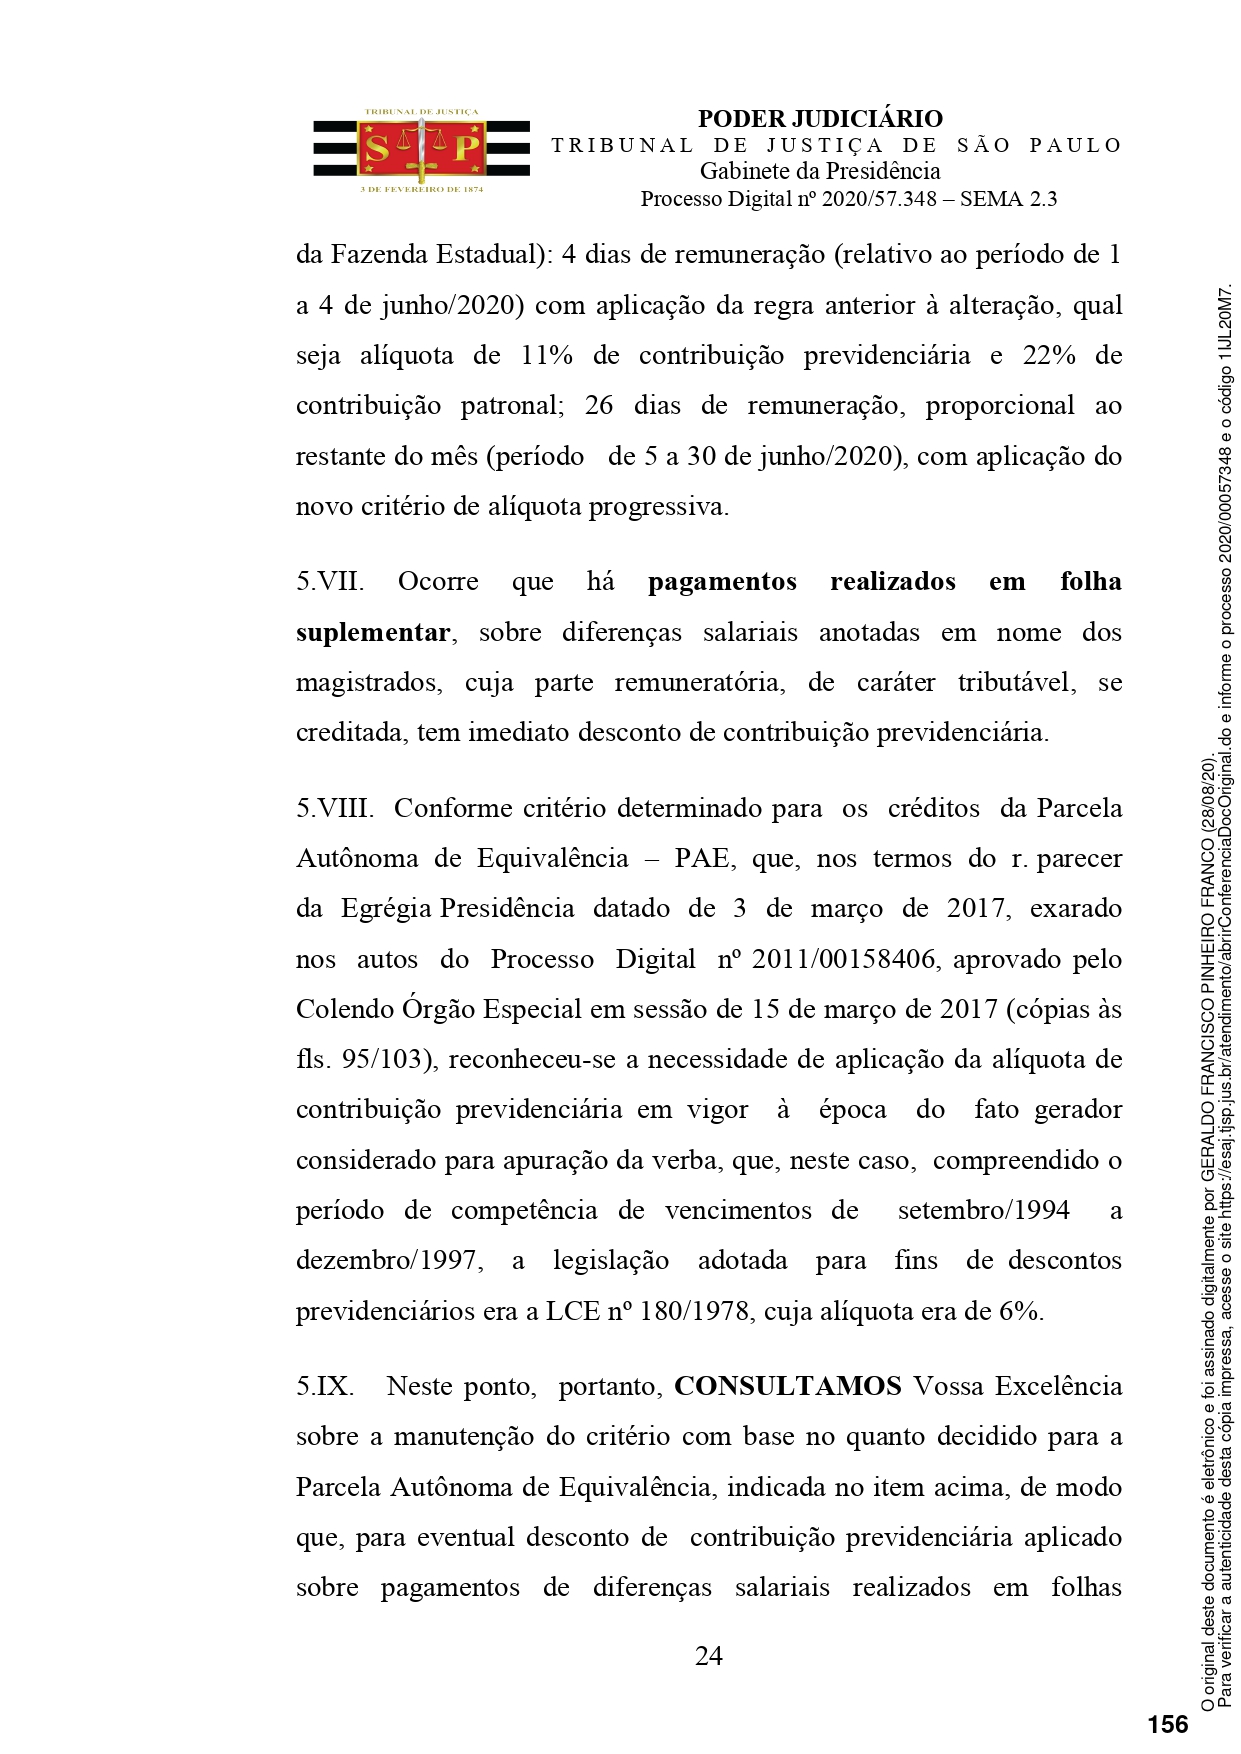 reforma-previdencia-tj-sp_page-0024.jpg